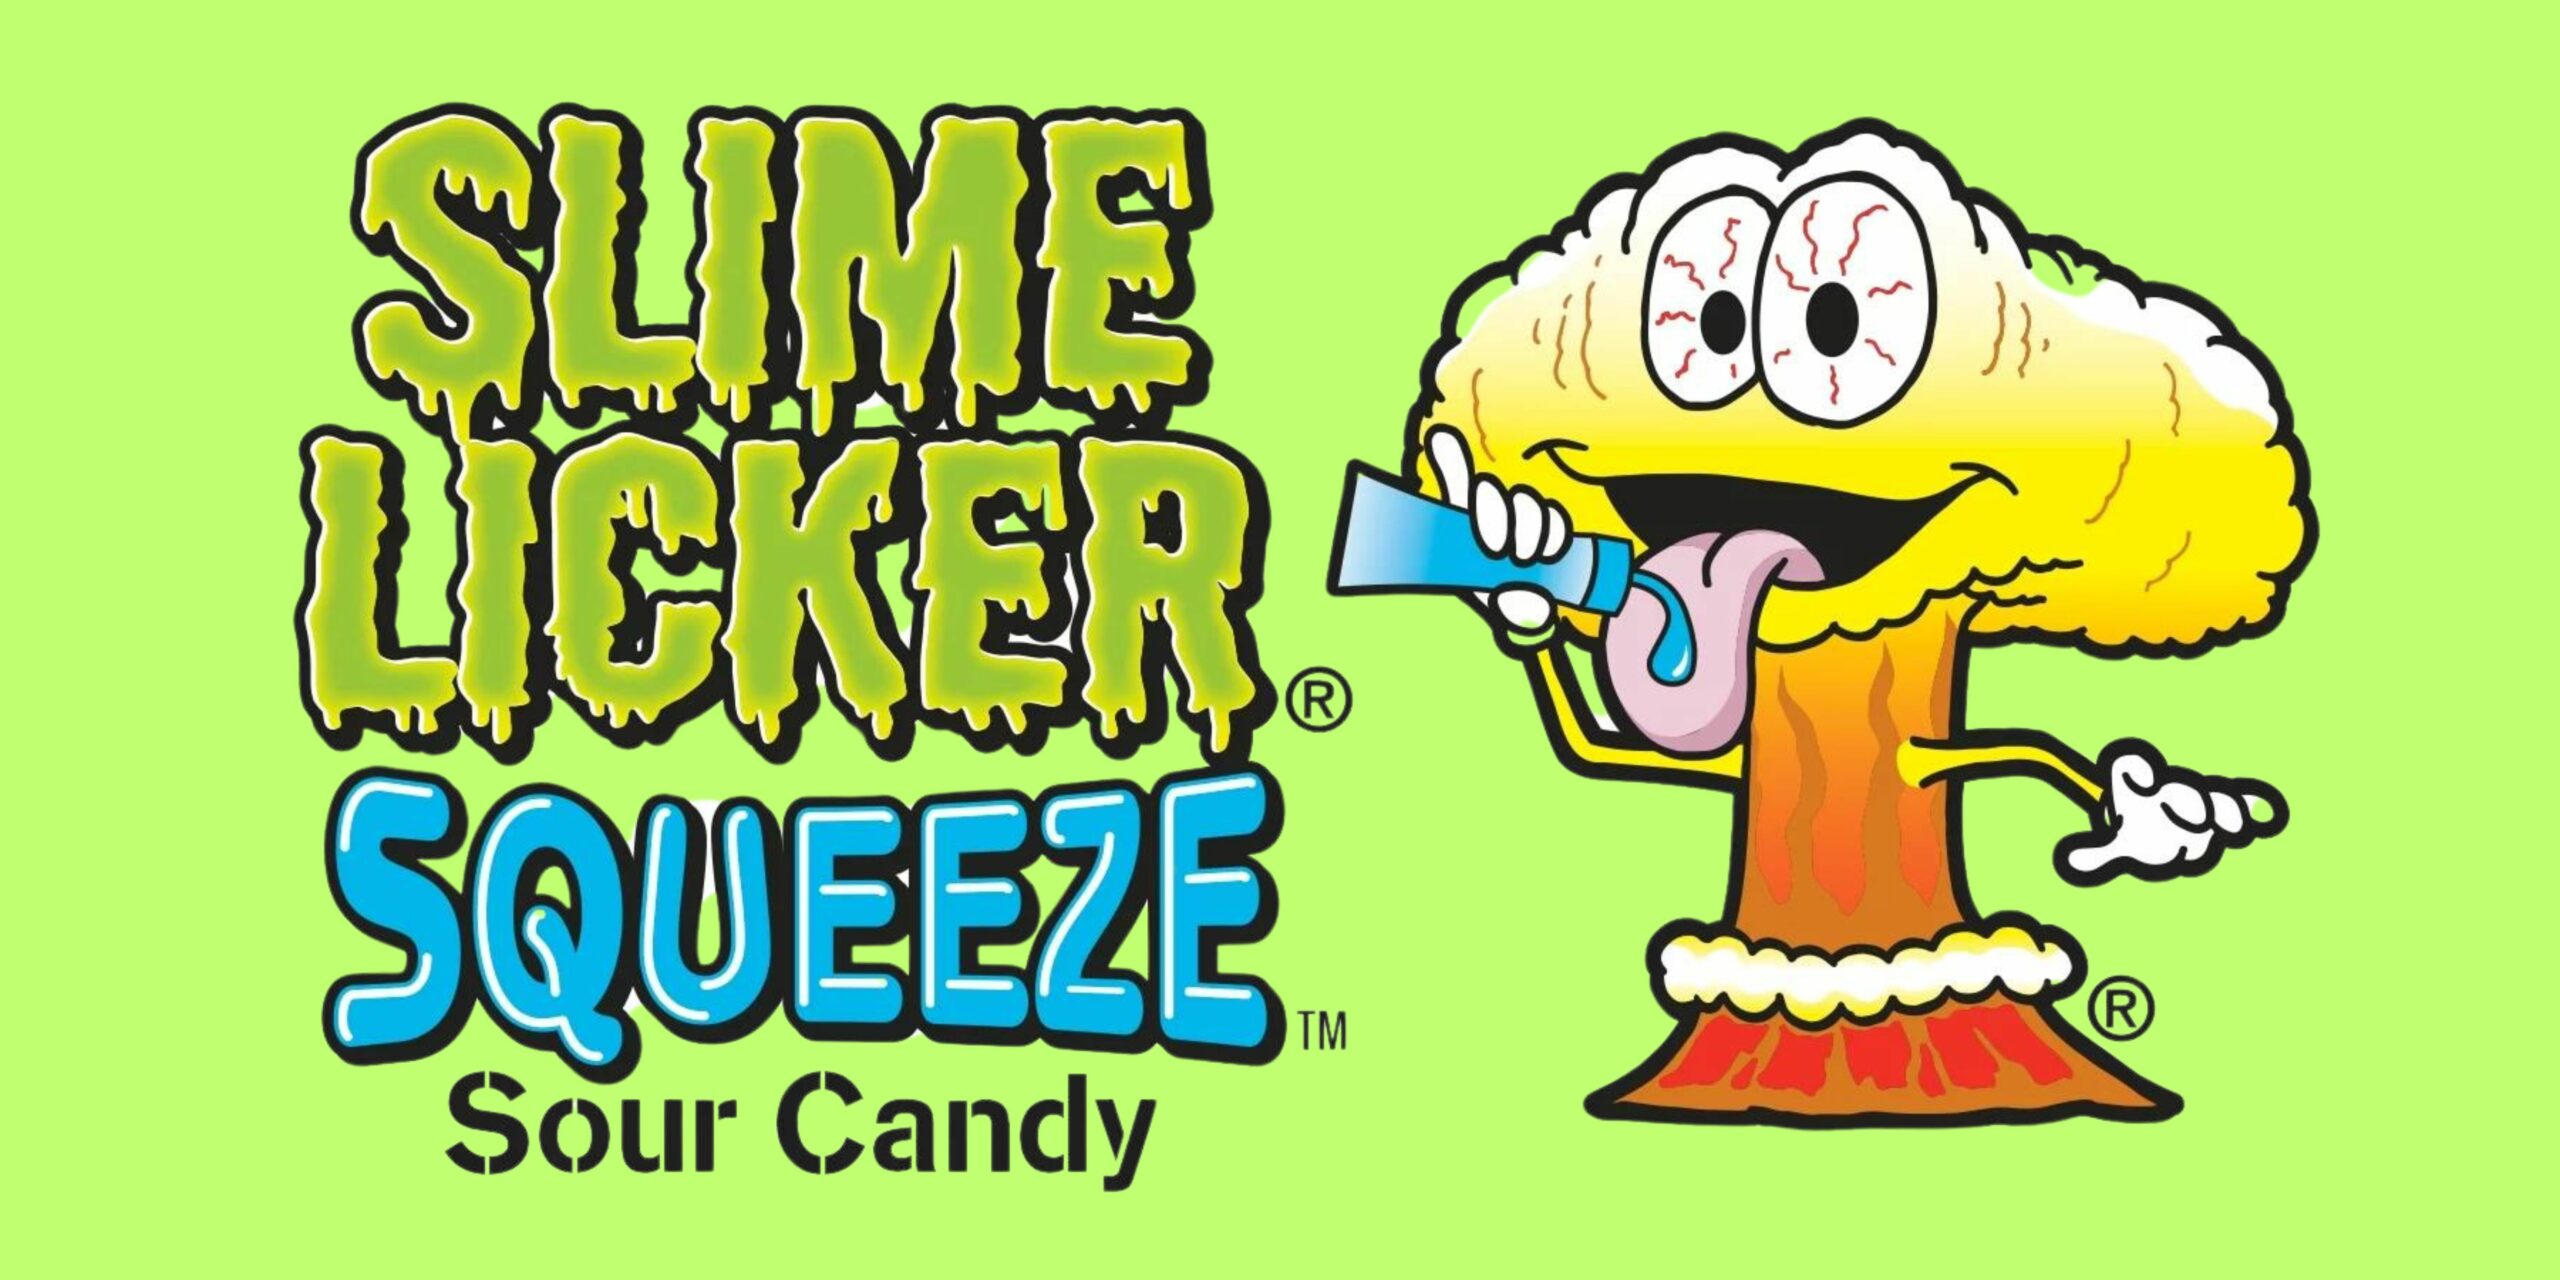 Toxic Waste Slime Licker Squeeze – BlueRazz 70G AMERICAN SNACKS - XMANIA Ireland 14